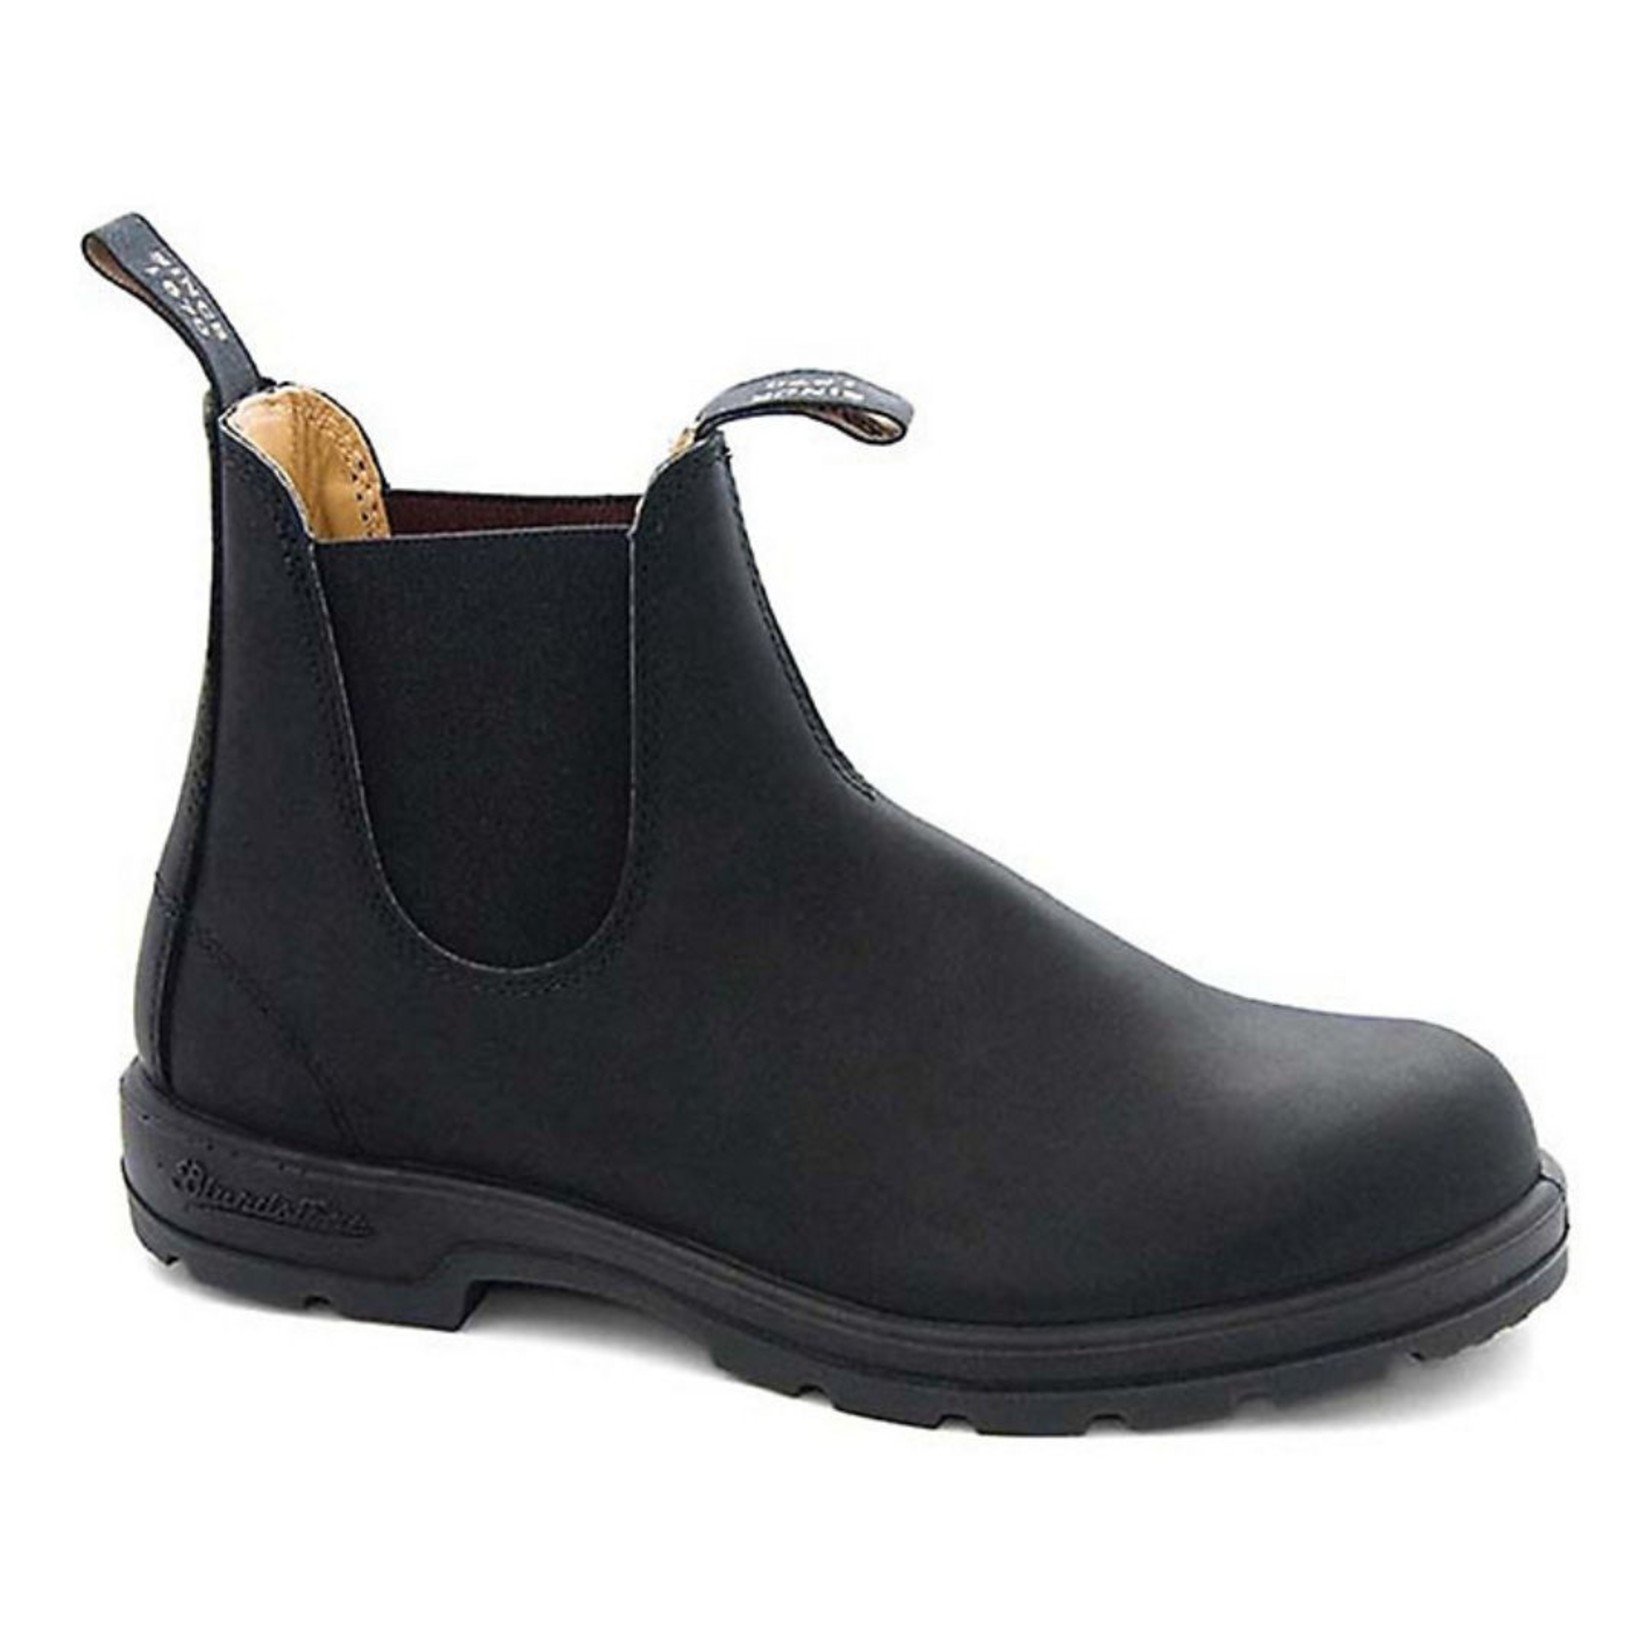 Blundstone 558 Chelsea Women's Fashion Boots - Shippy Shoes